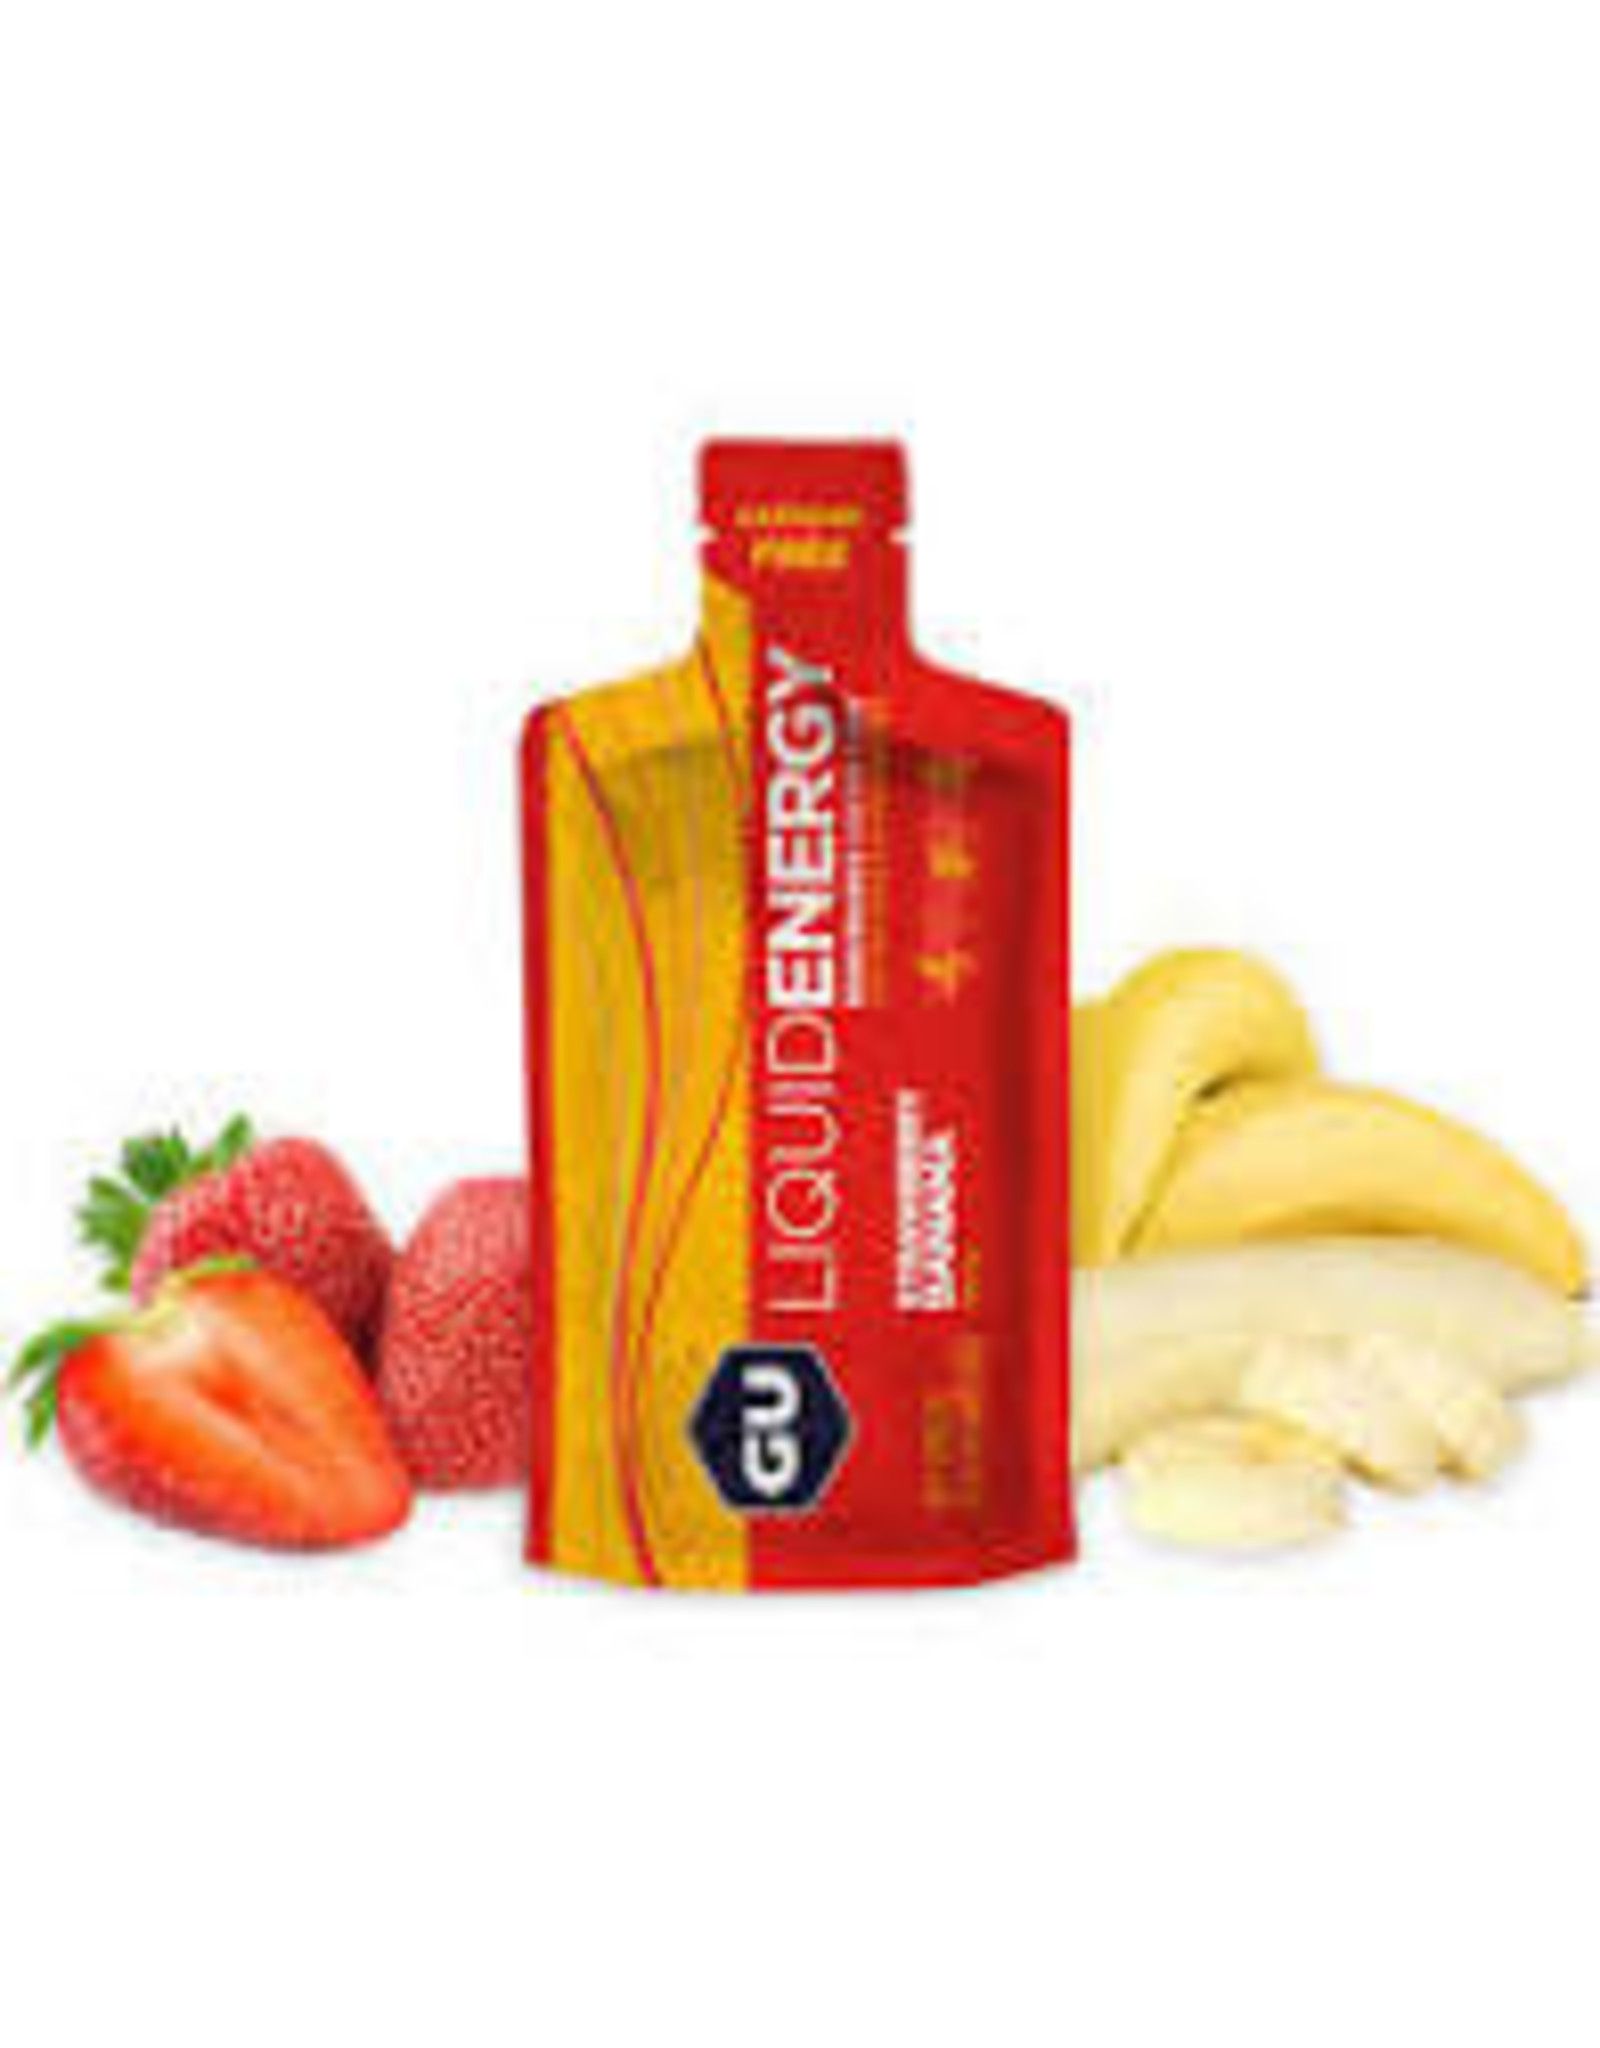 GU Energy Labs GU Liquid Energy Strawberry Banana Box of 12 single